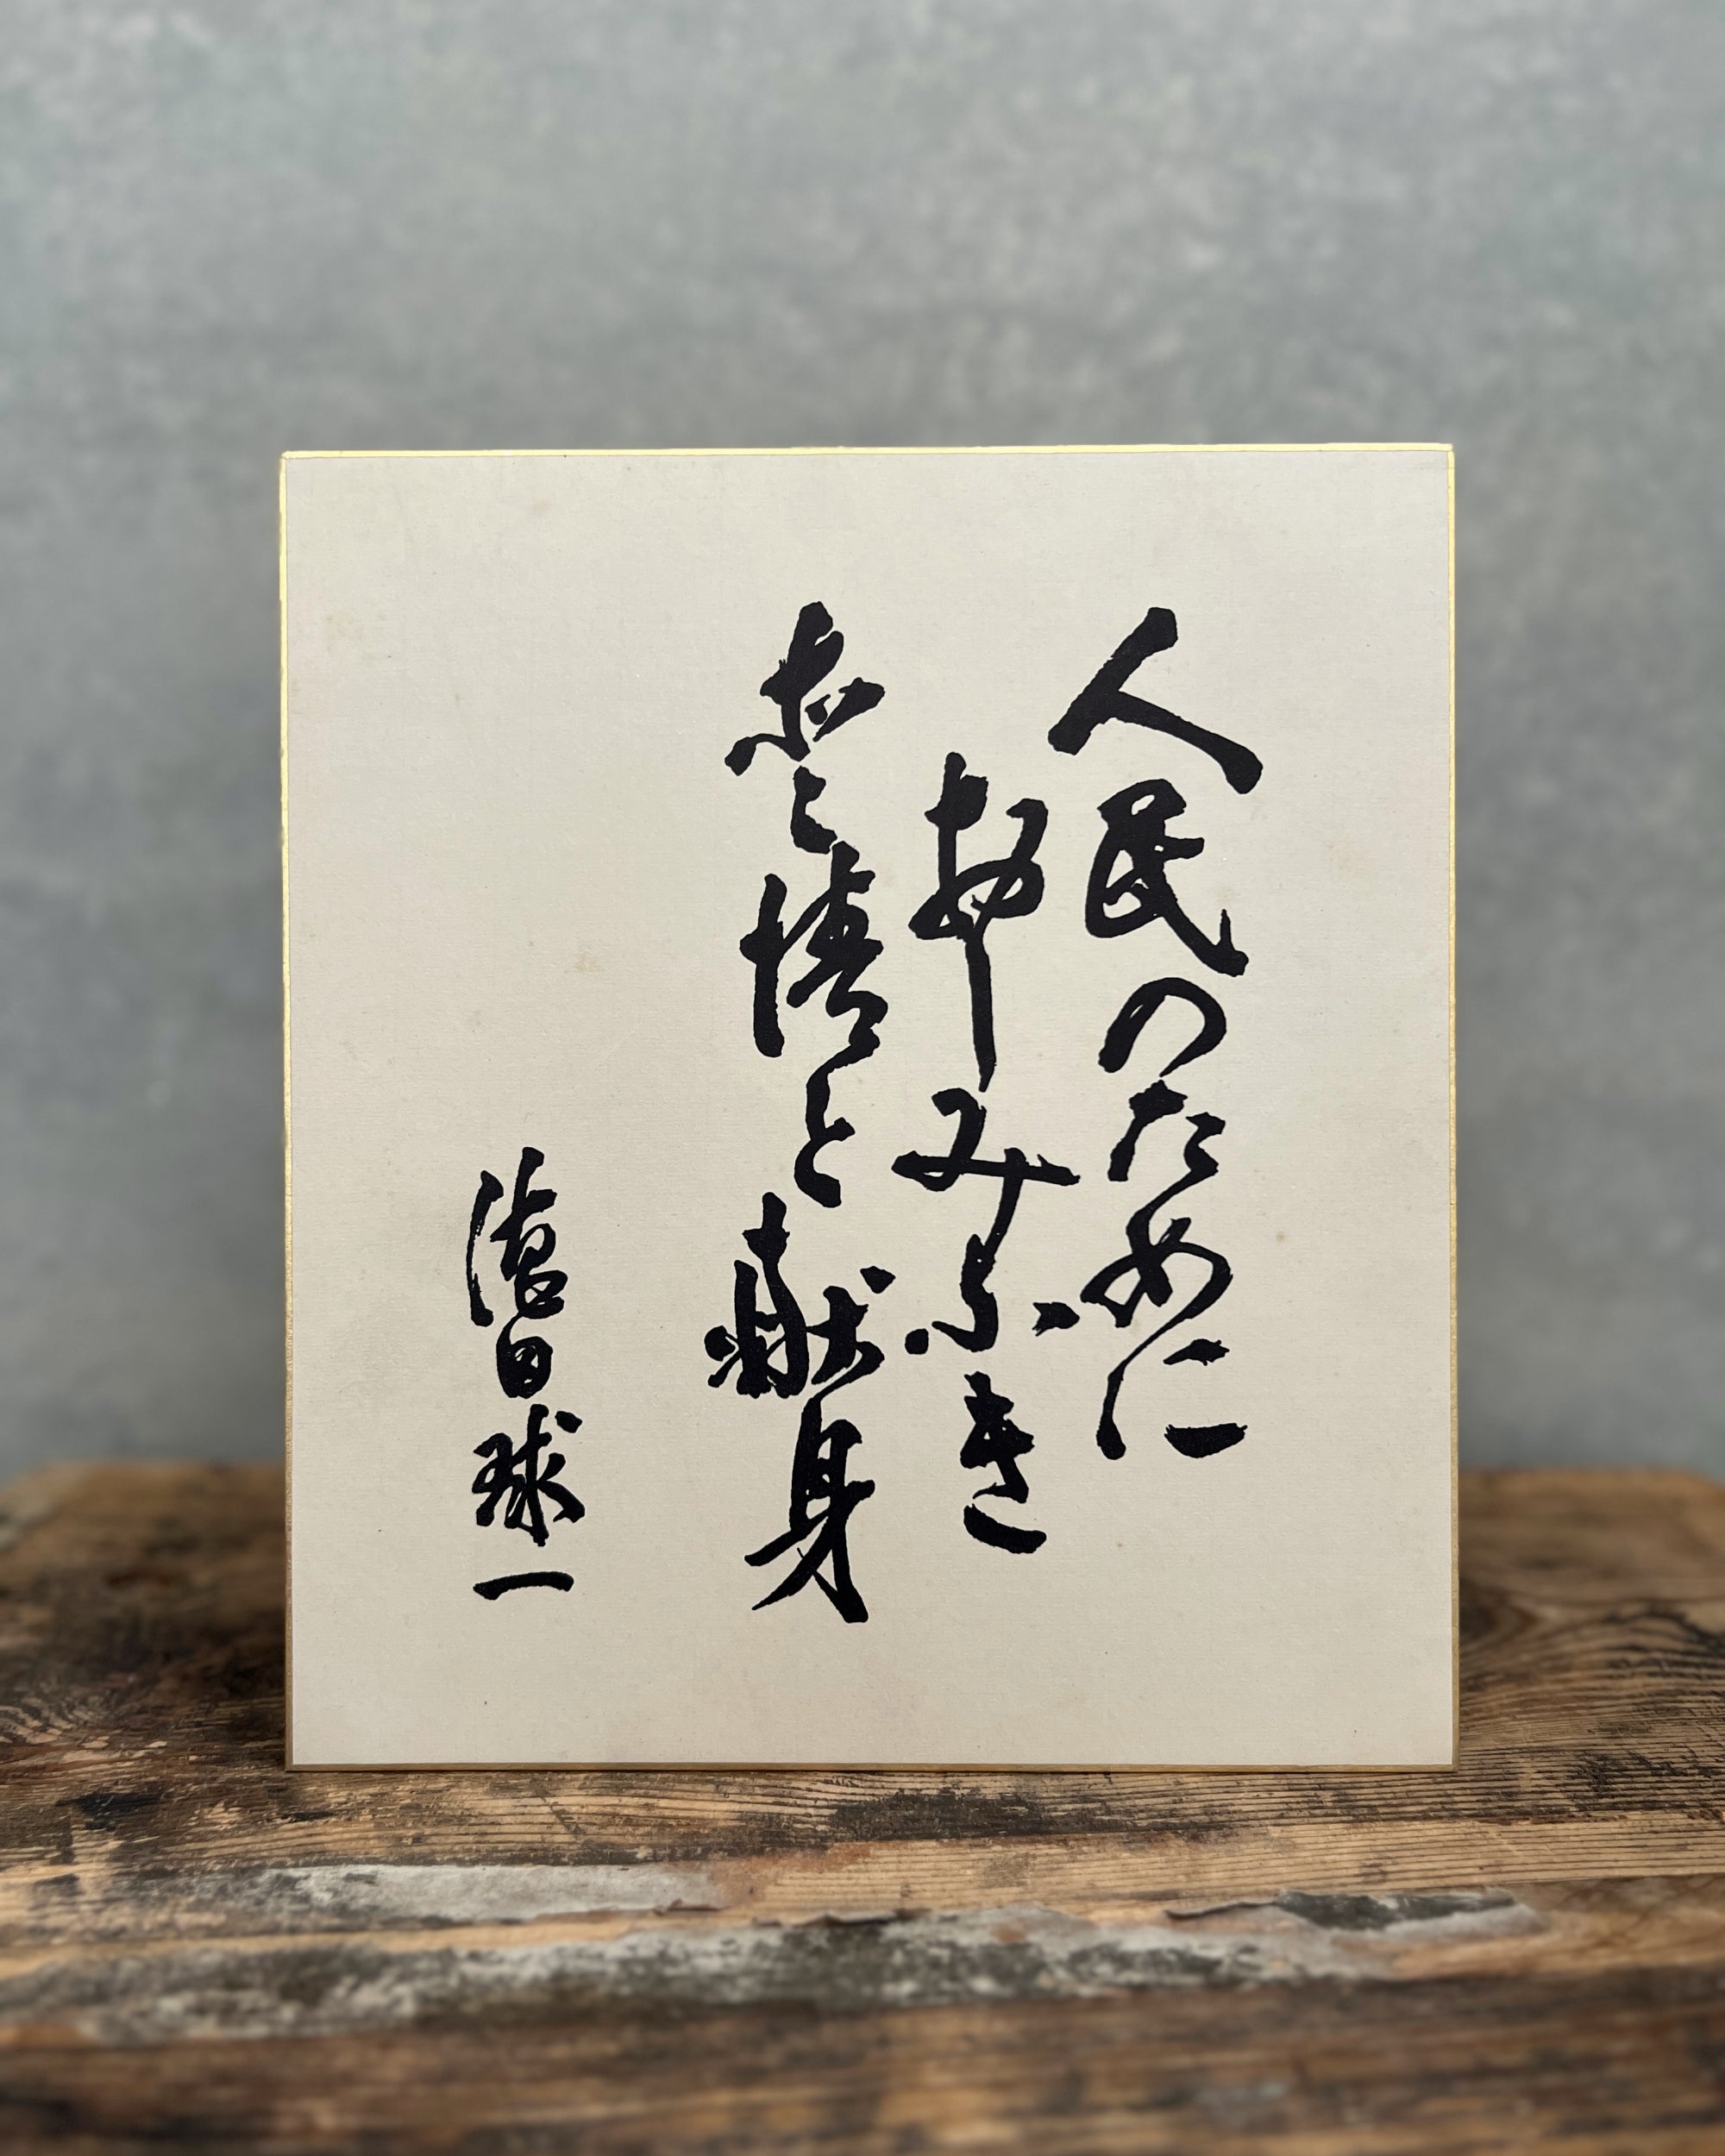 vintage japanese calligraphy board